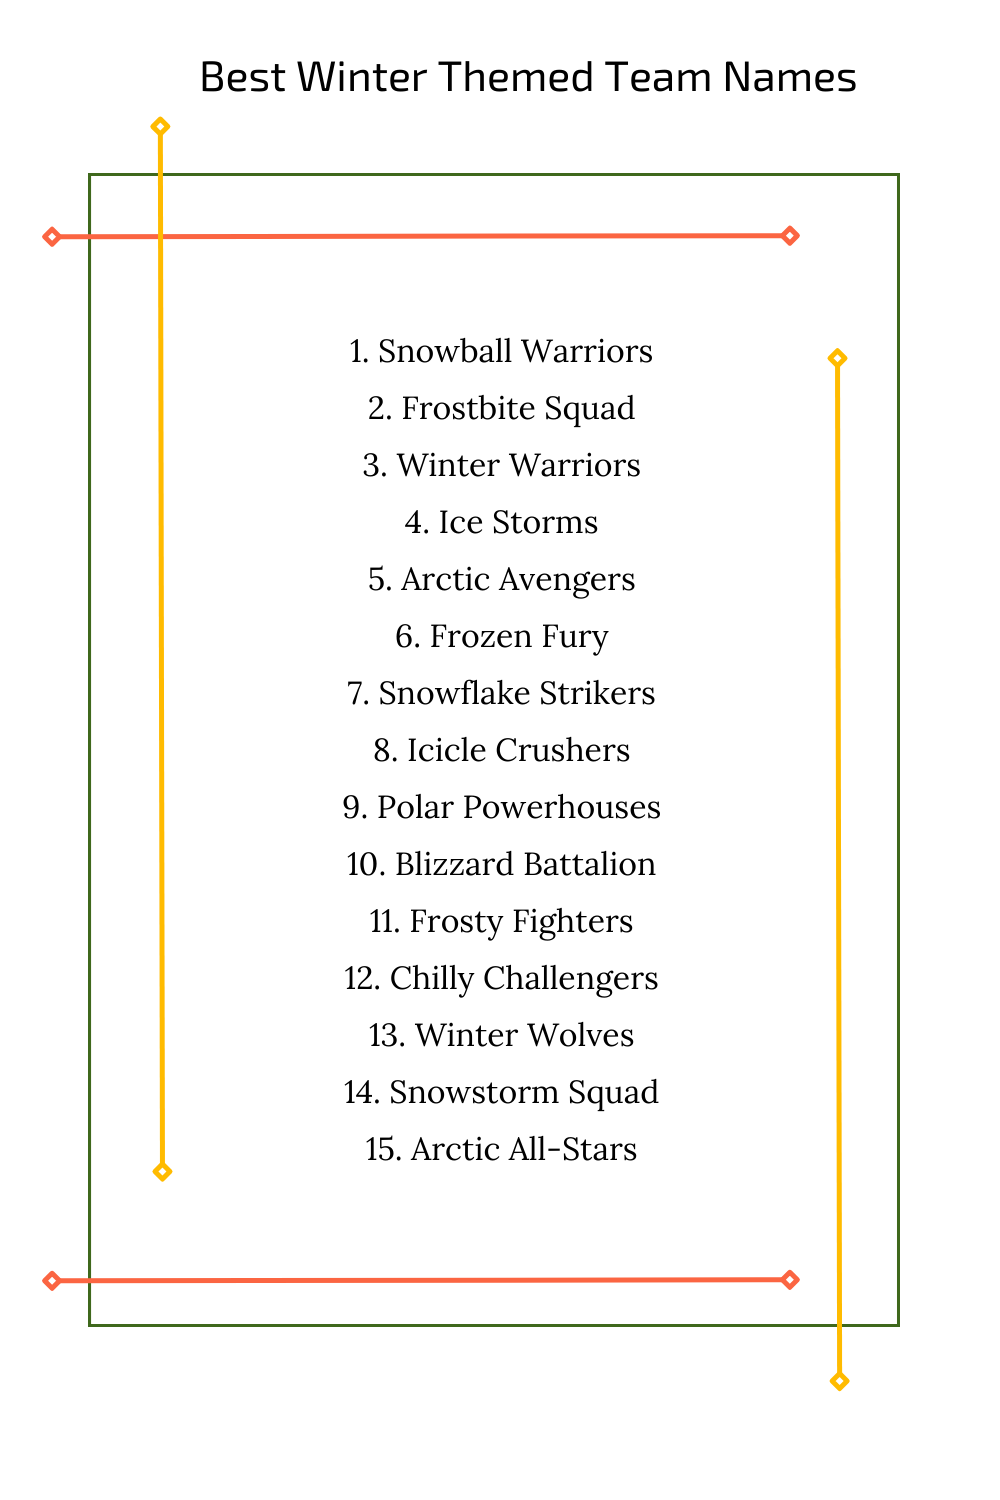 Best Winter Themed Team Names